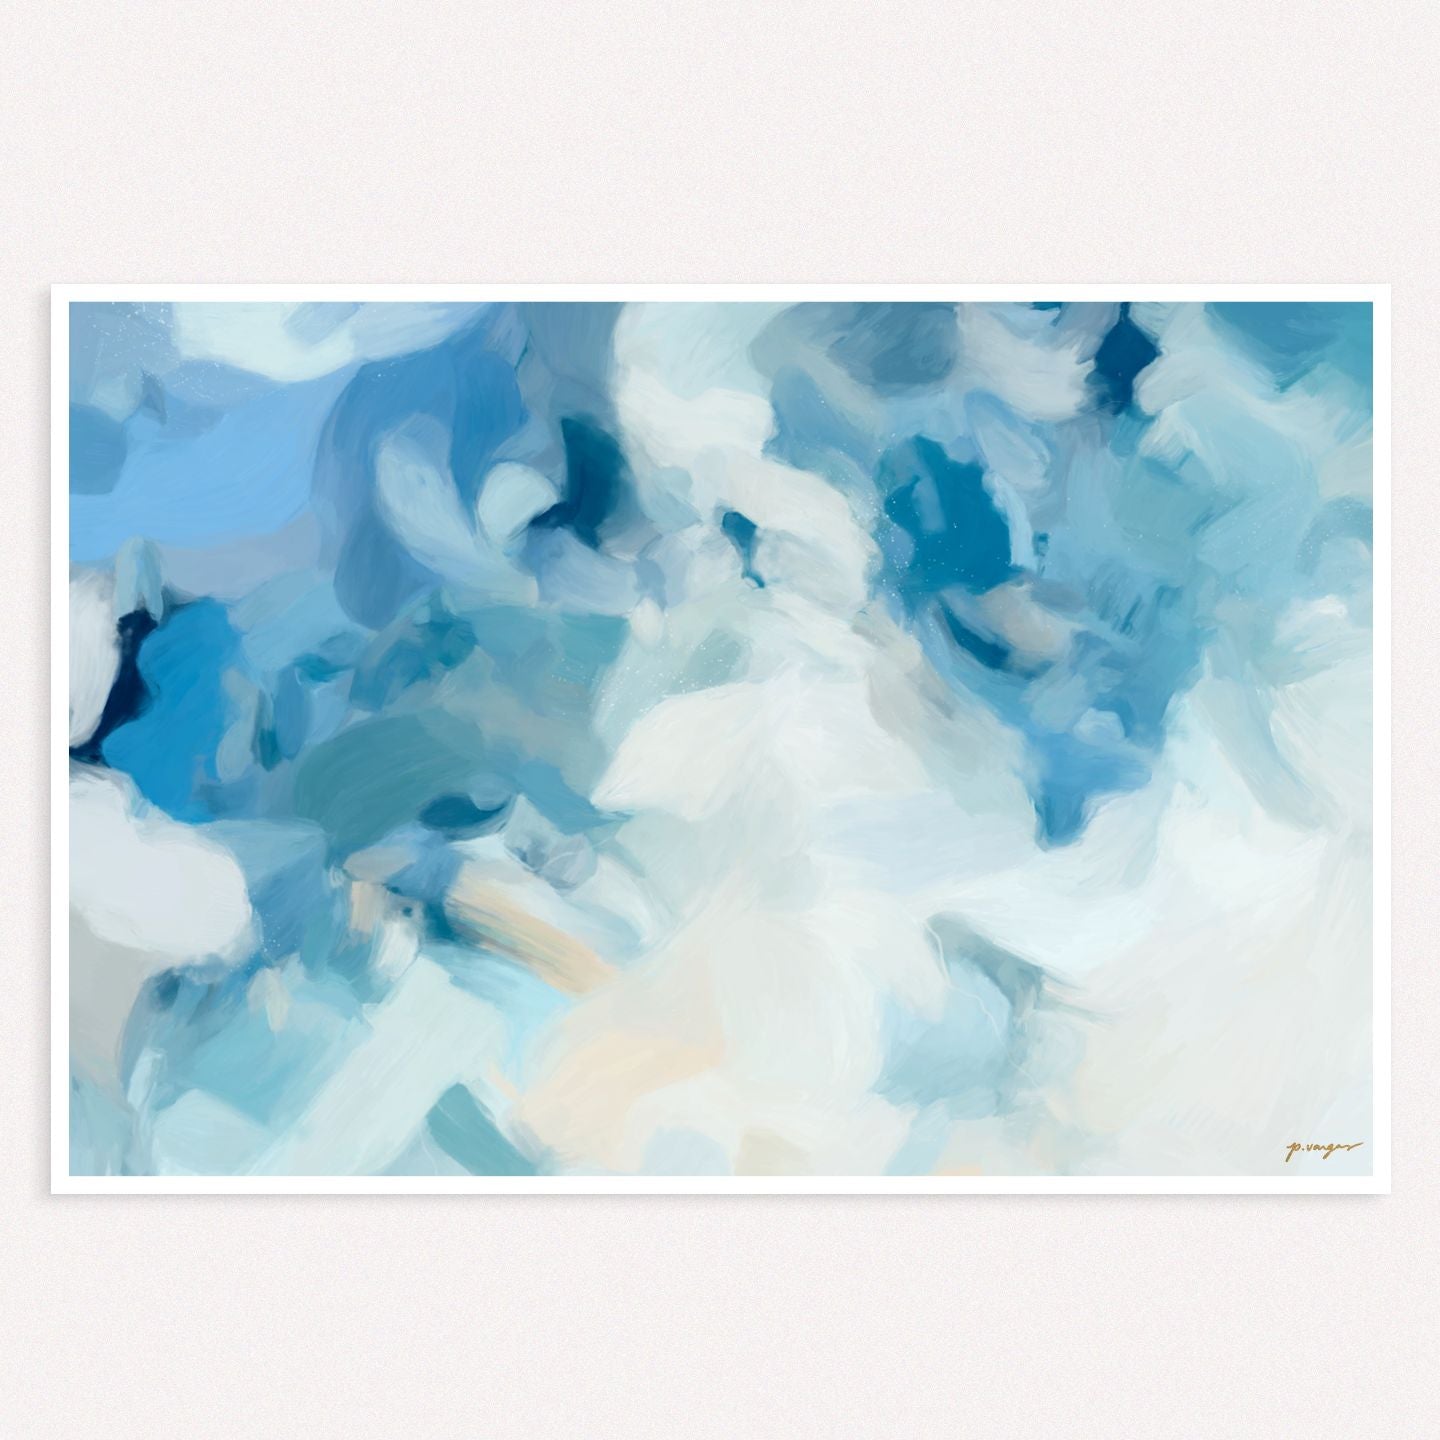 Liviana, blue colorful horizontal abstract wall art print by Parima Studio